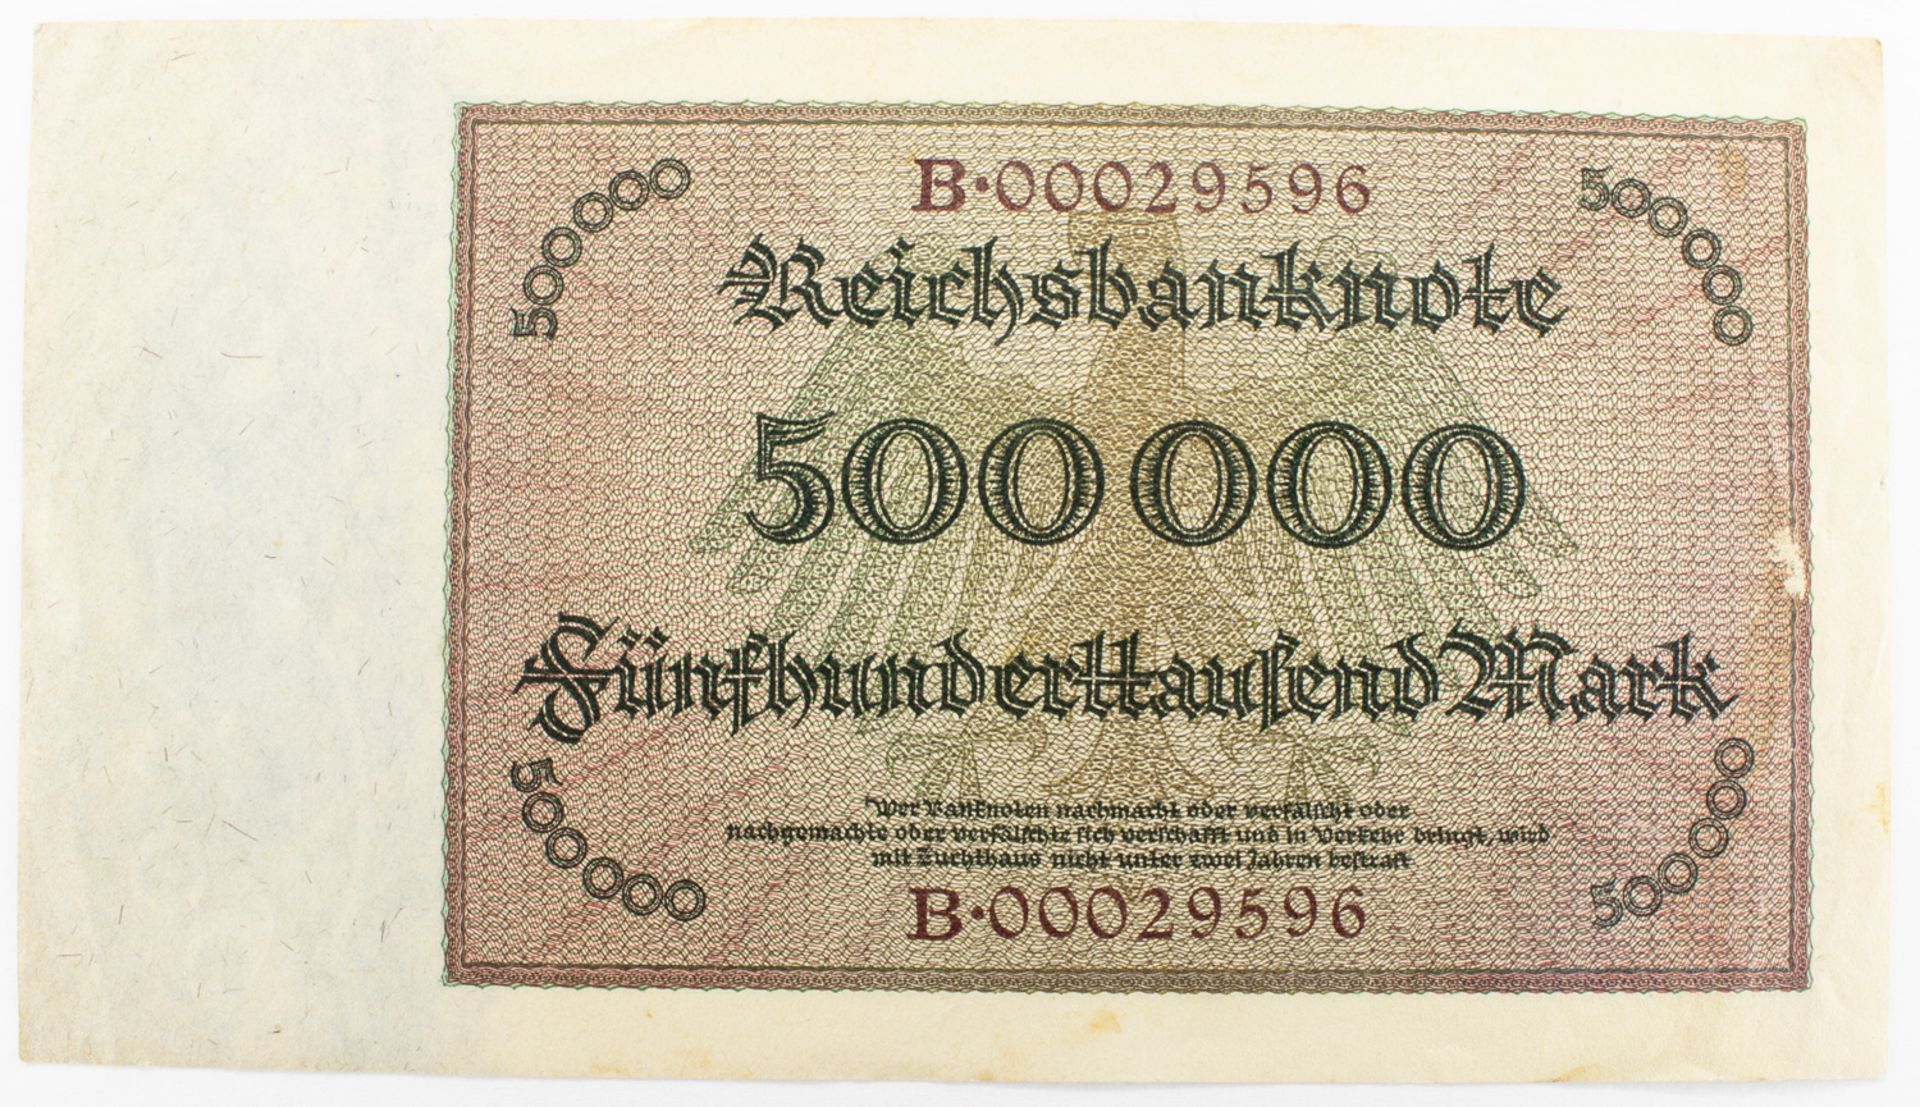 500.000 Mark - Image 2 of 2